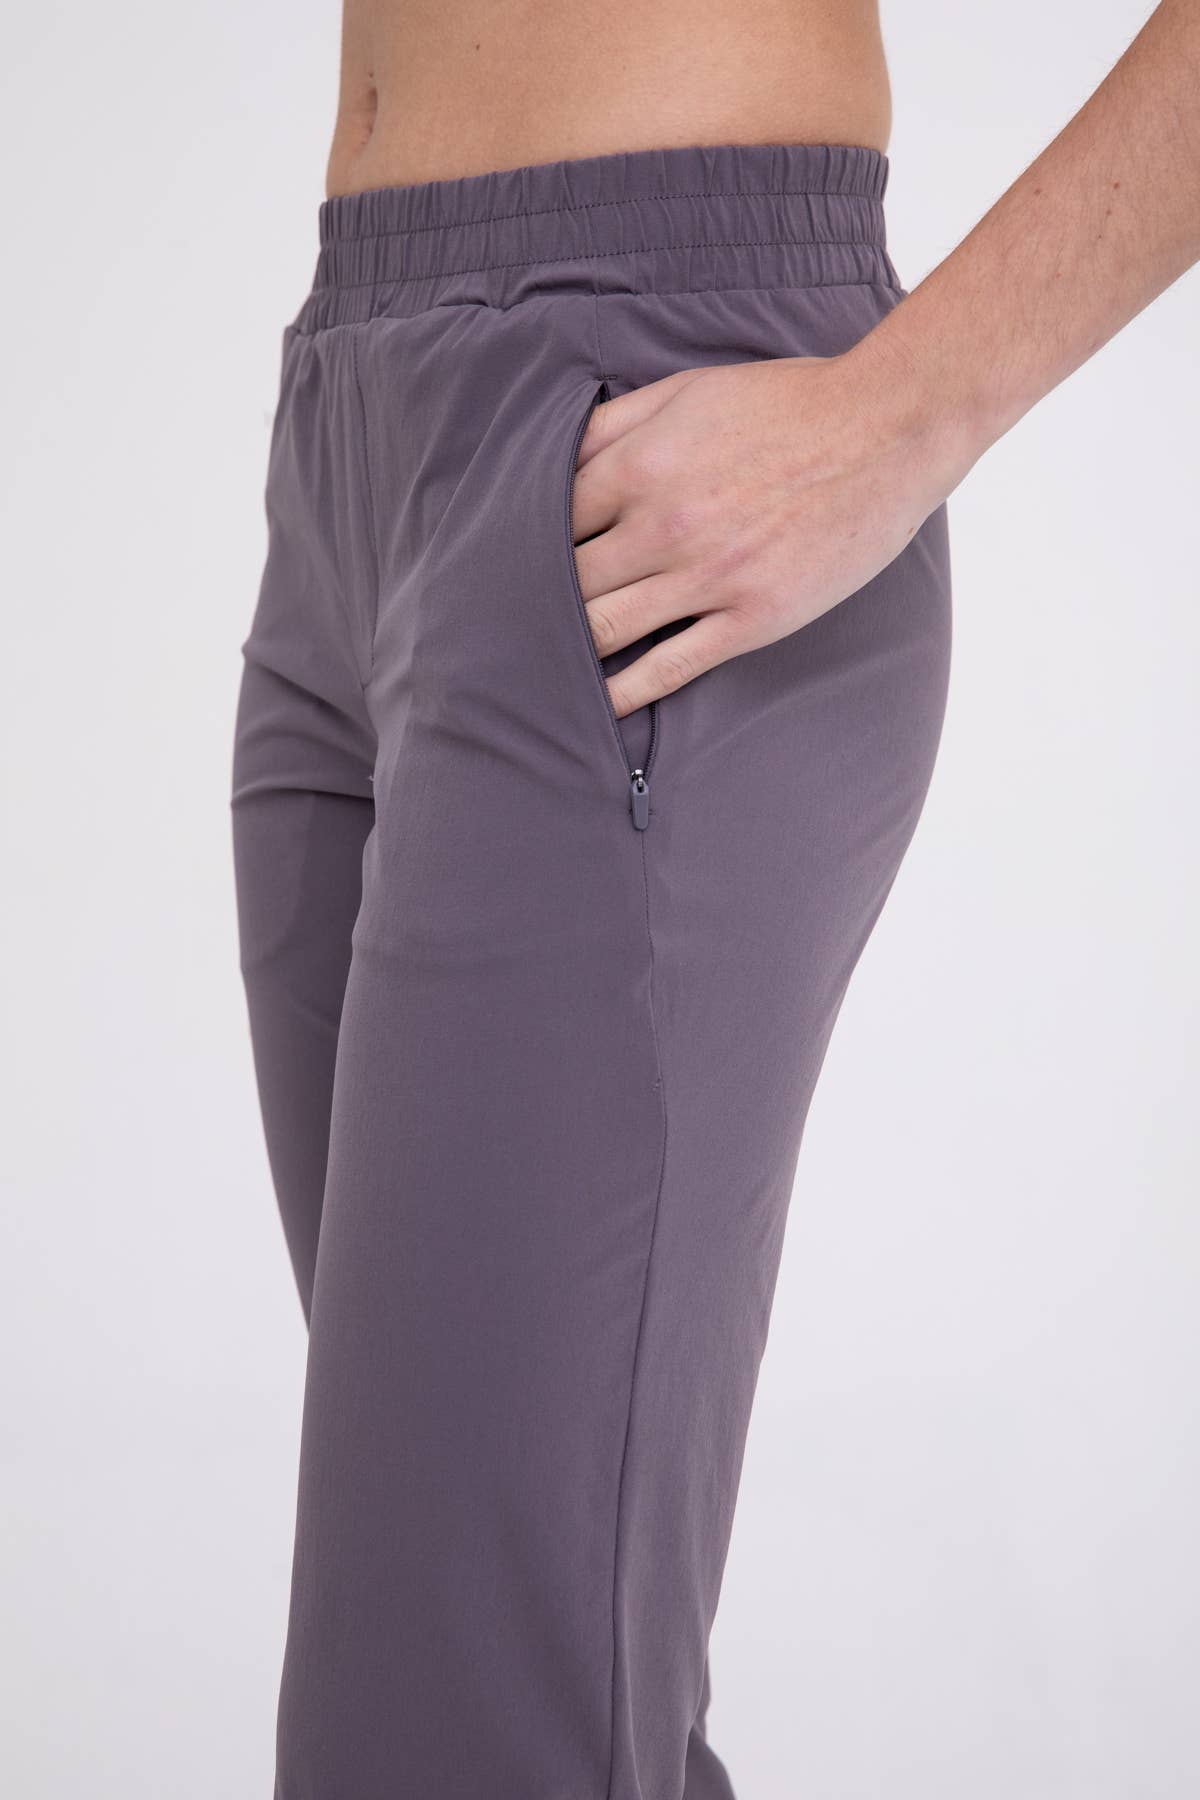 Nylon-Blend Capri Active Pants